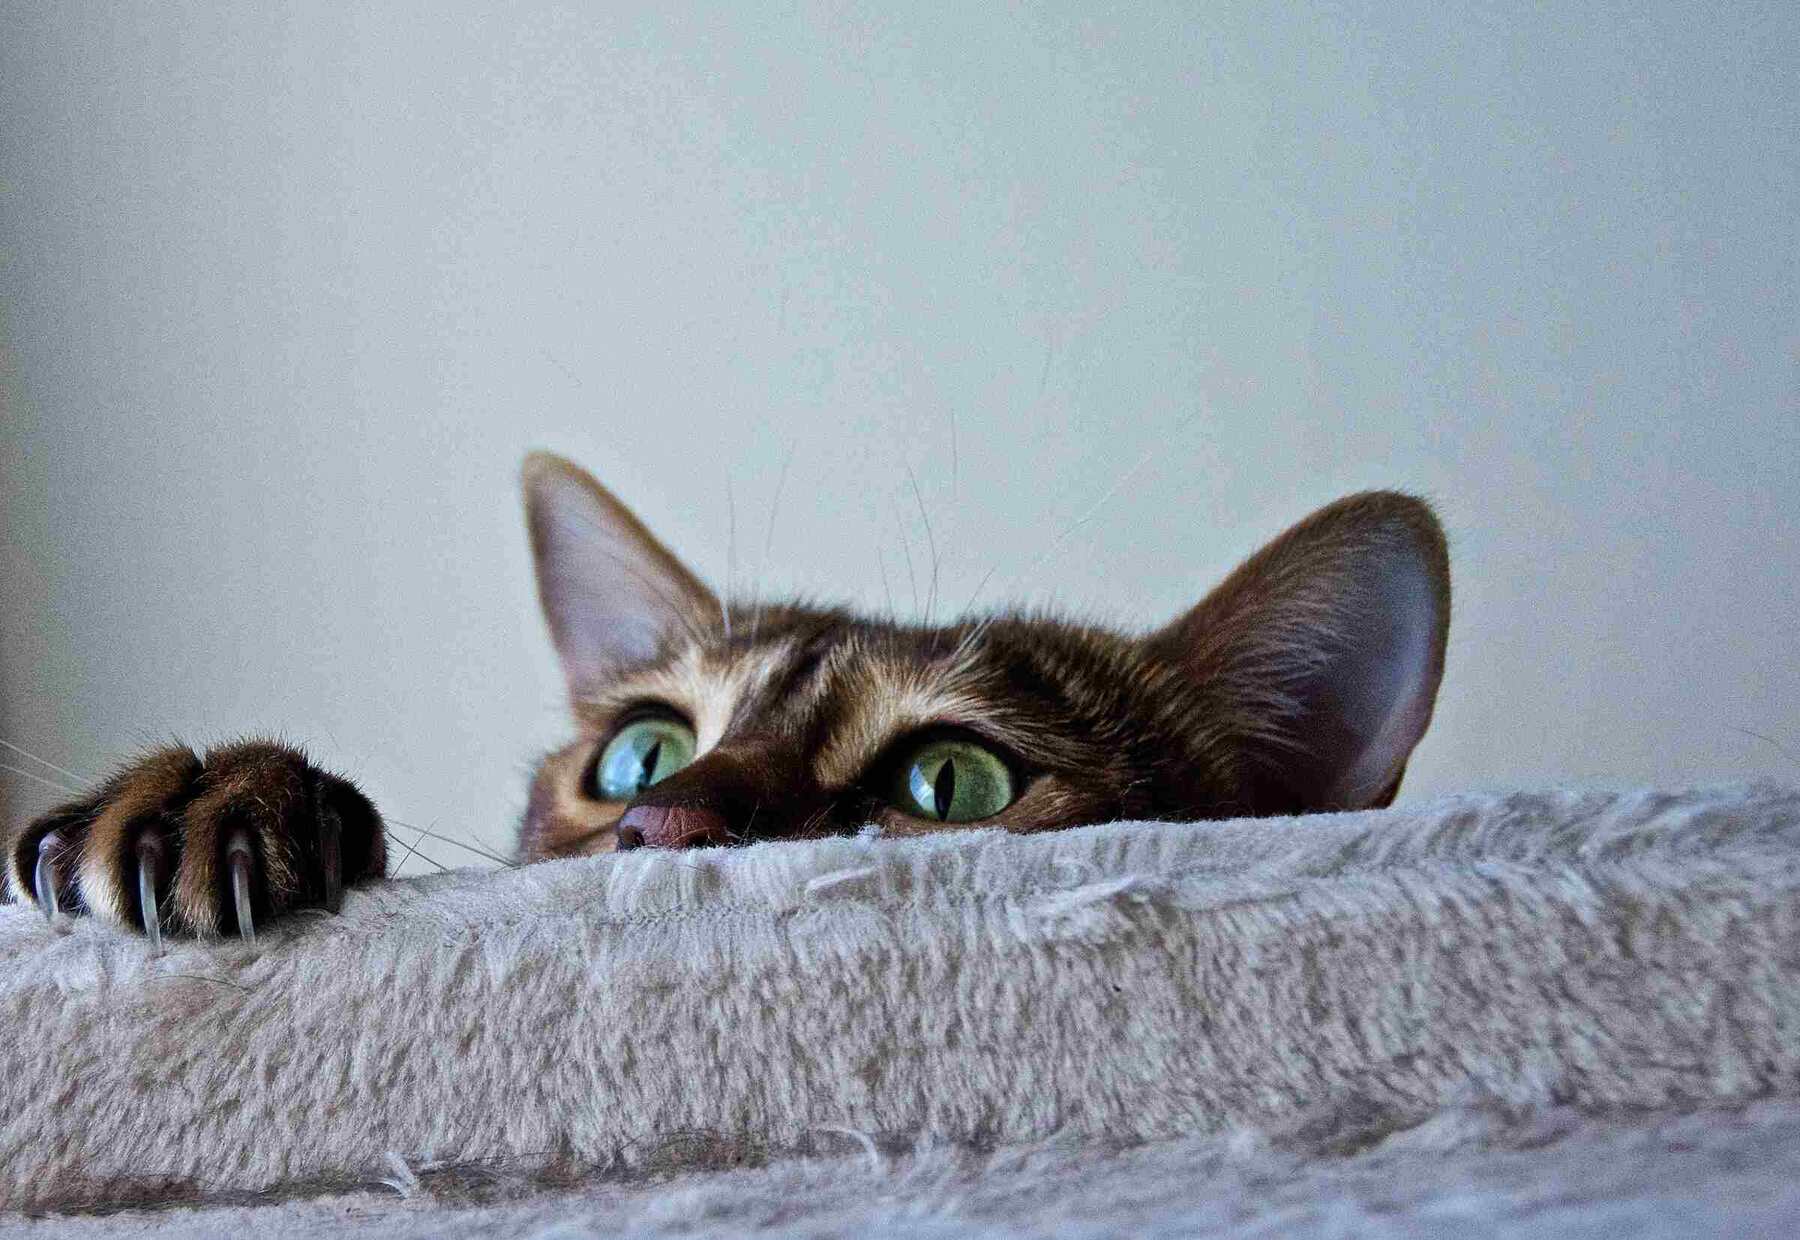 Cat peeking over edge